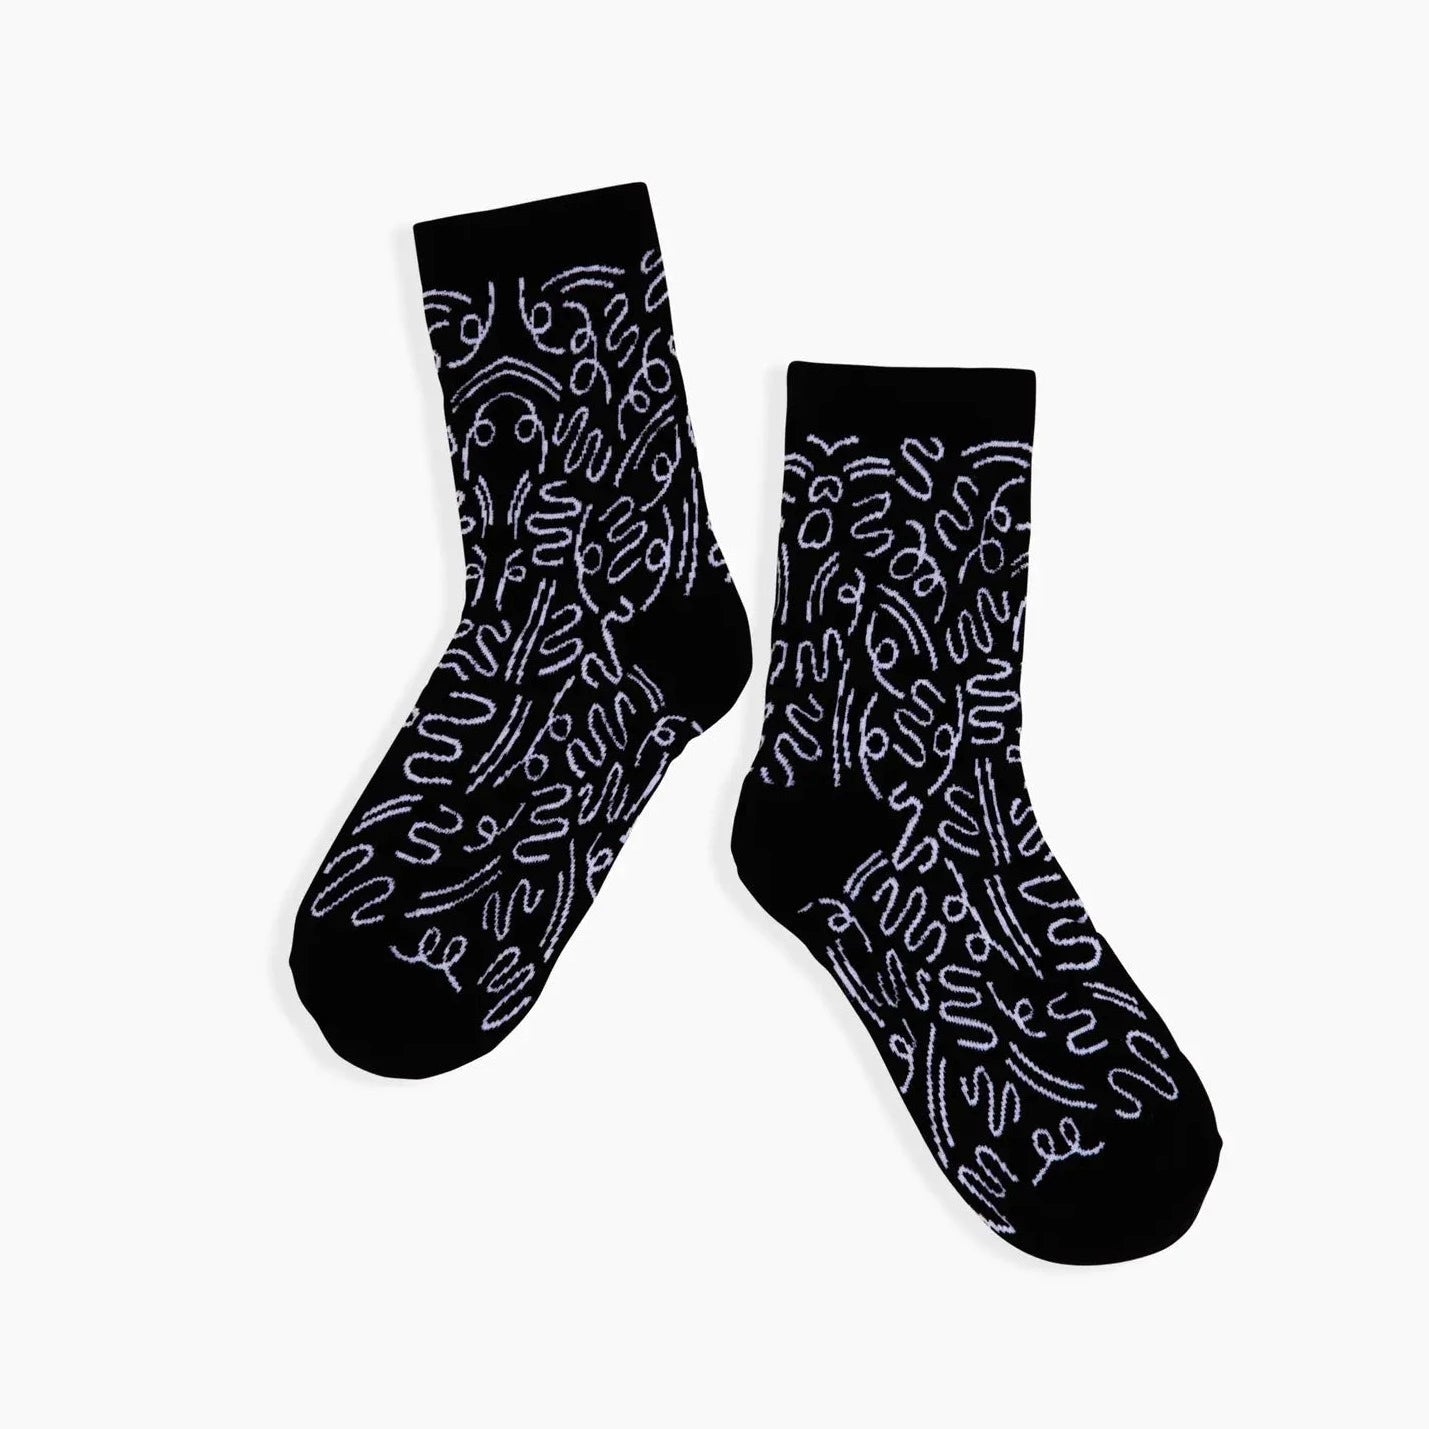 Poketo Cotton Socks in Doodles | Prelude and Dawn Los Angeles, CA